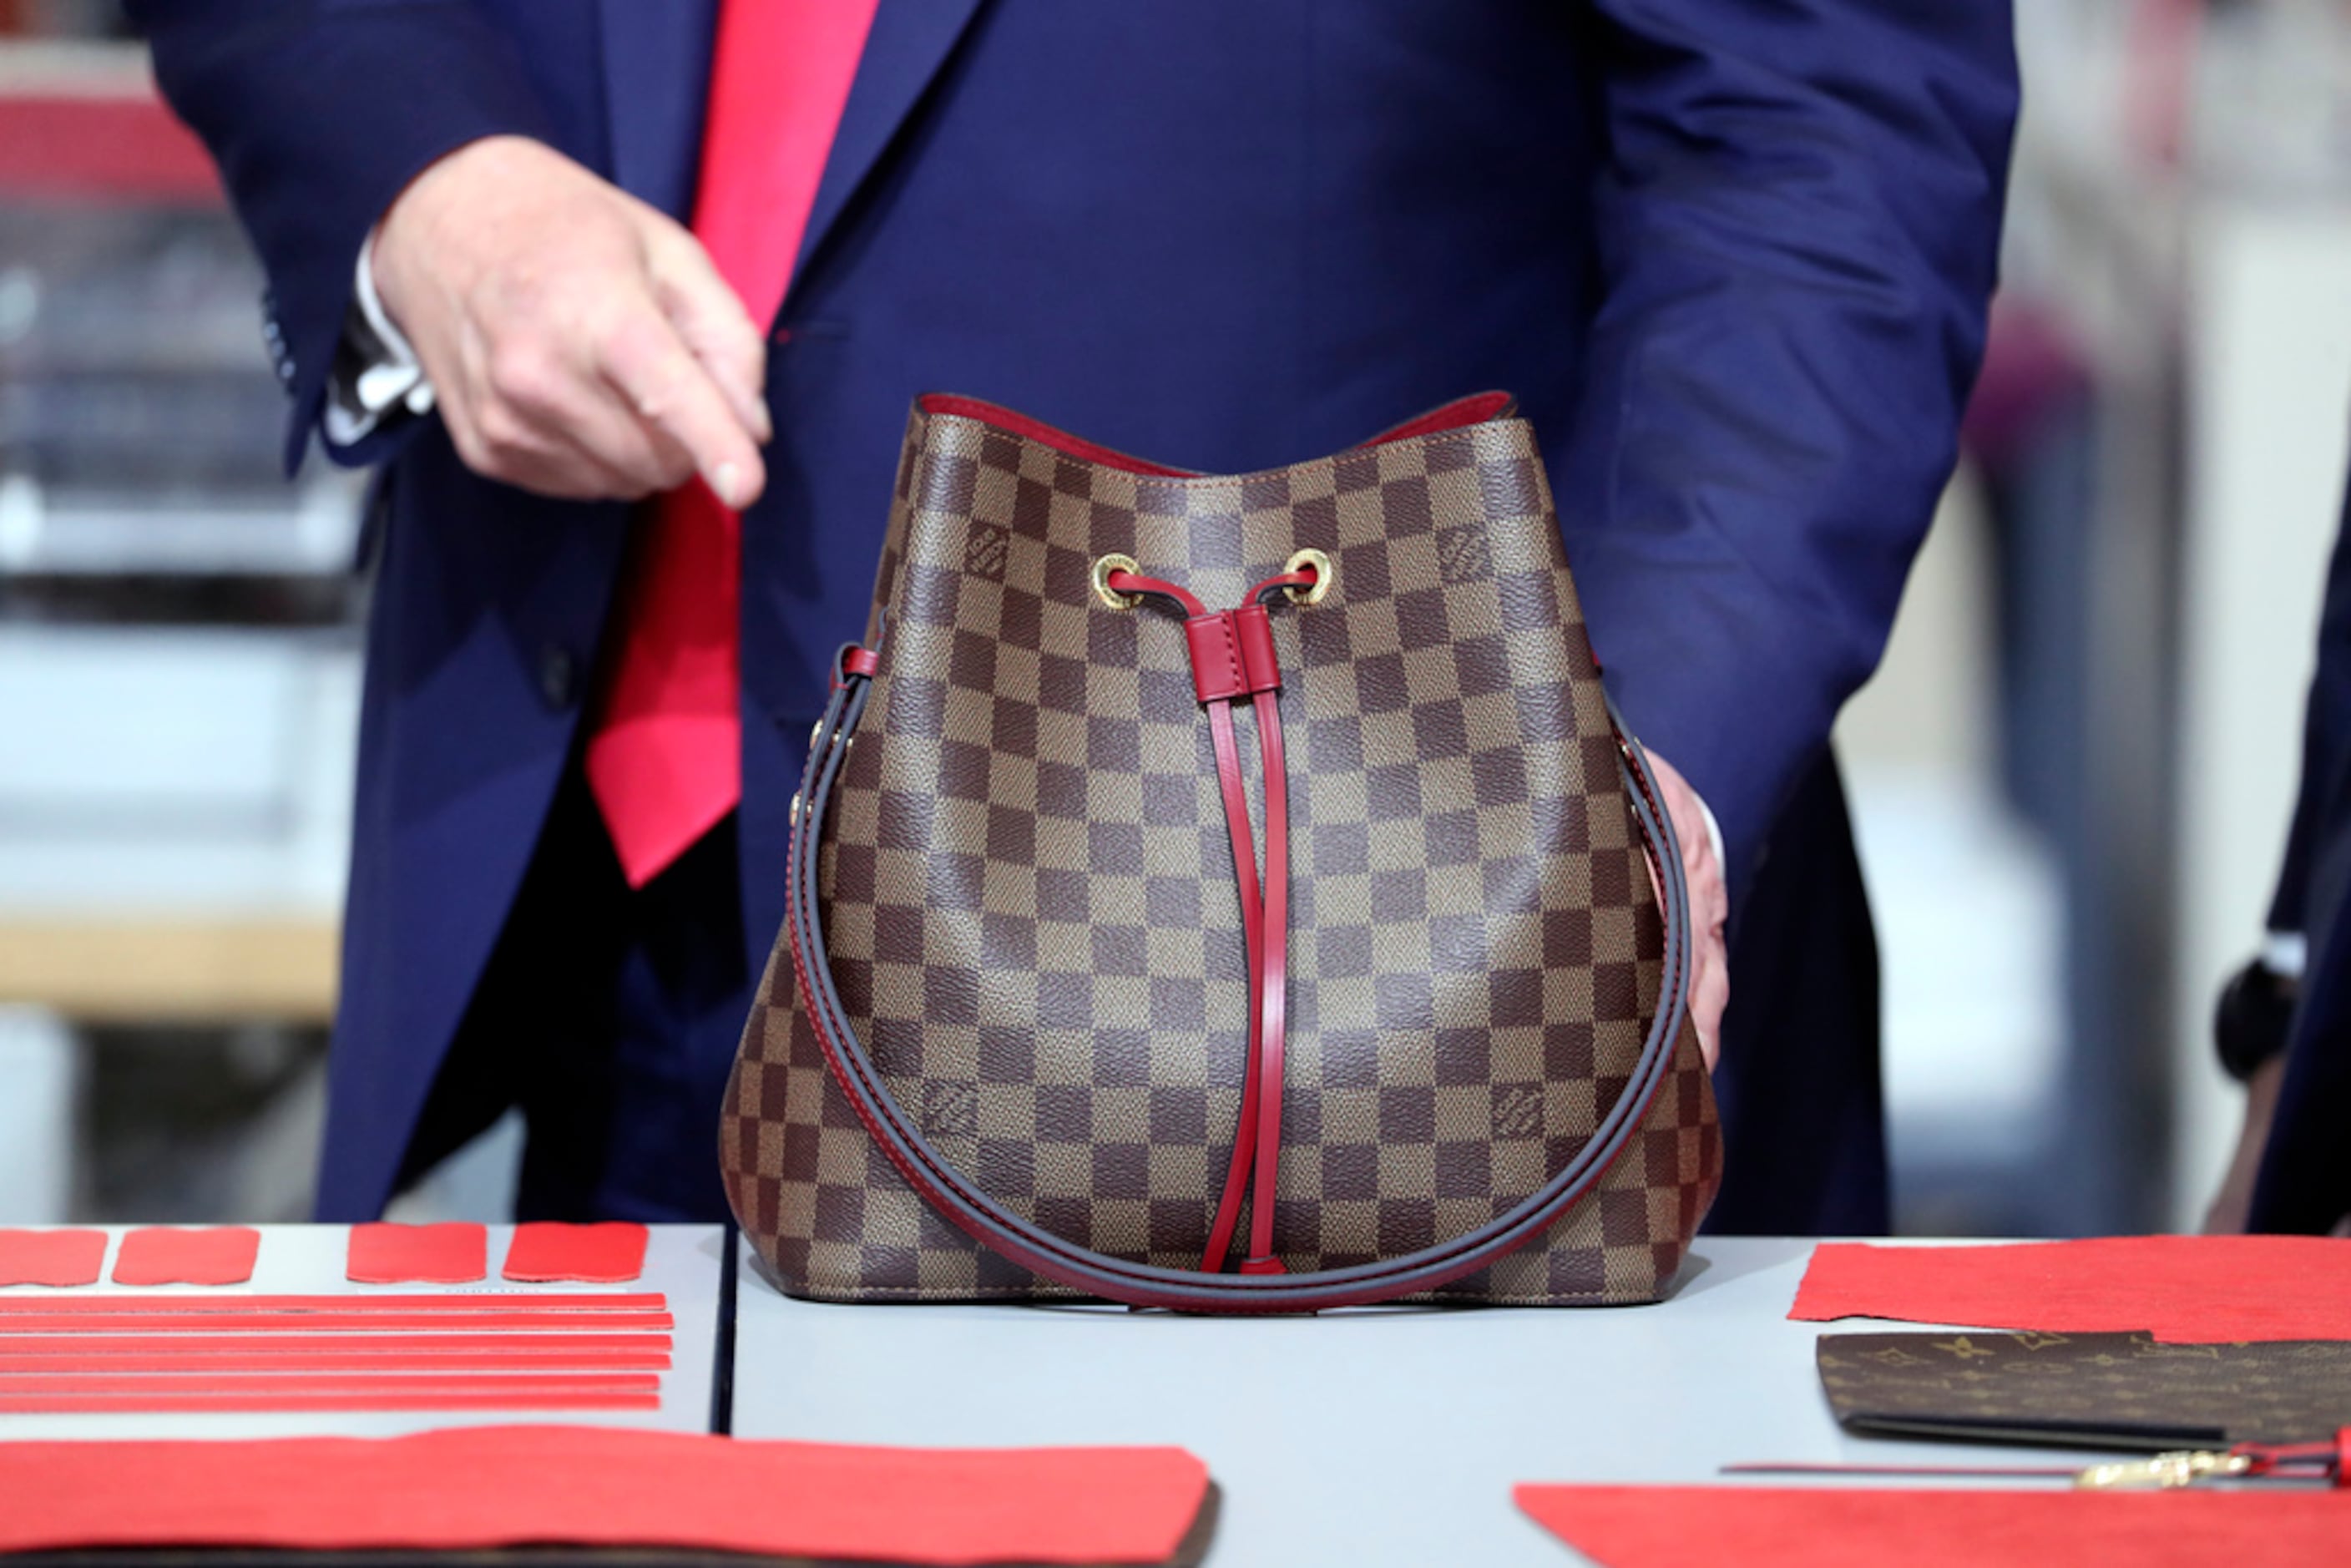 Here's your chance to go inside Louis Vuitton's Alvarado handbag workshop